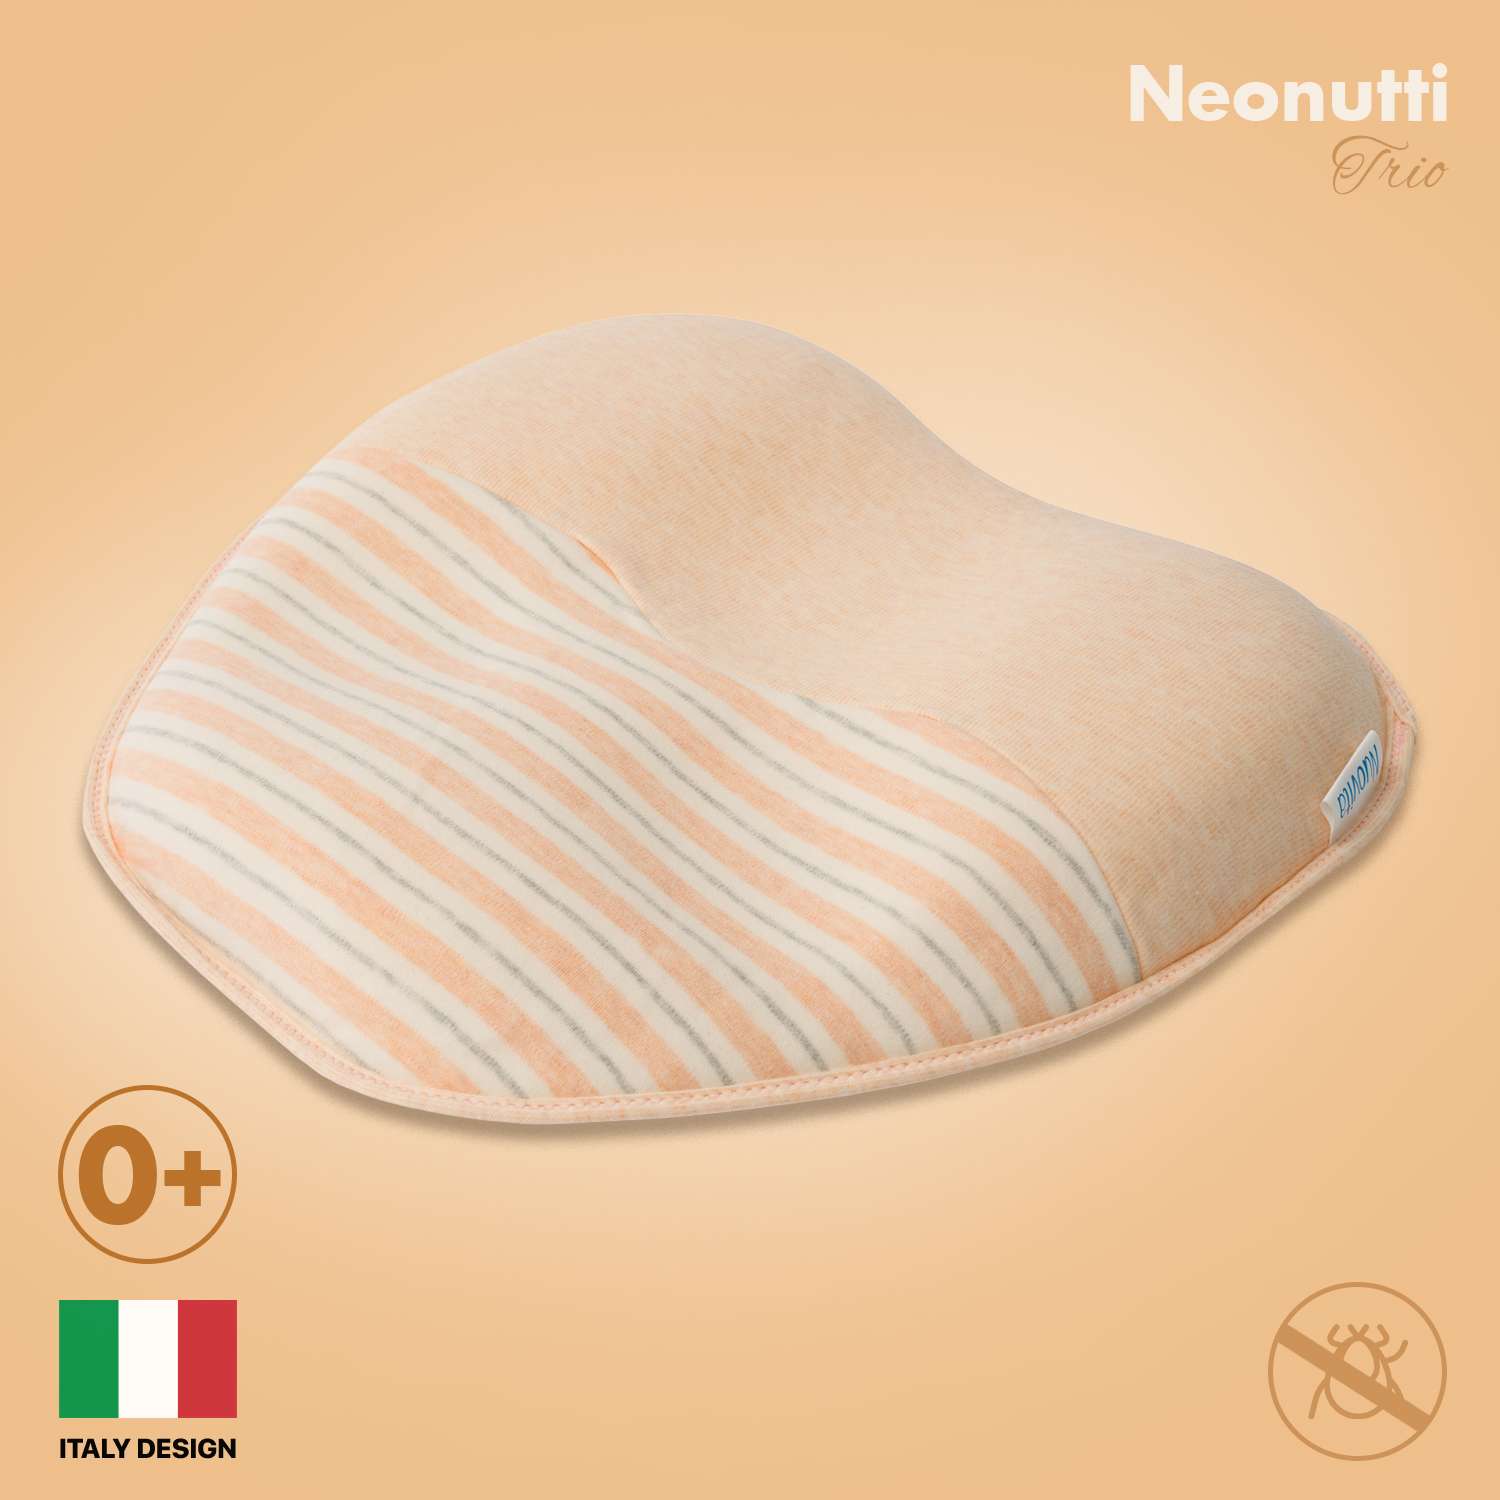 Подушка для новорожденного Nuovita Neonutti Trio Dipinto Персиковая - фото 2